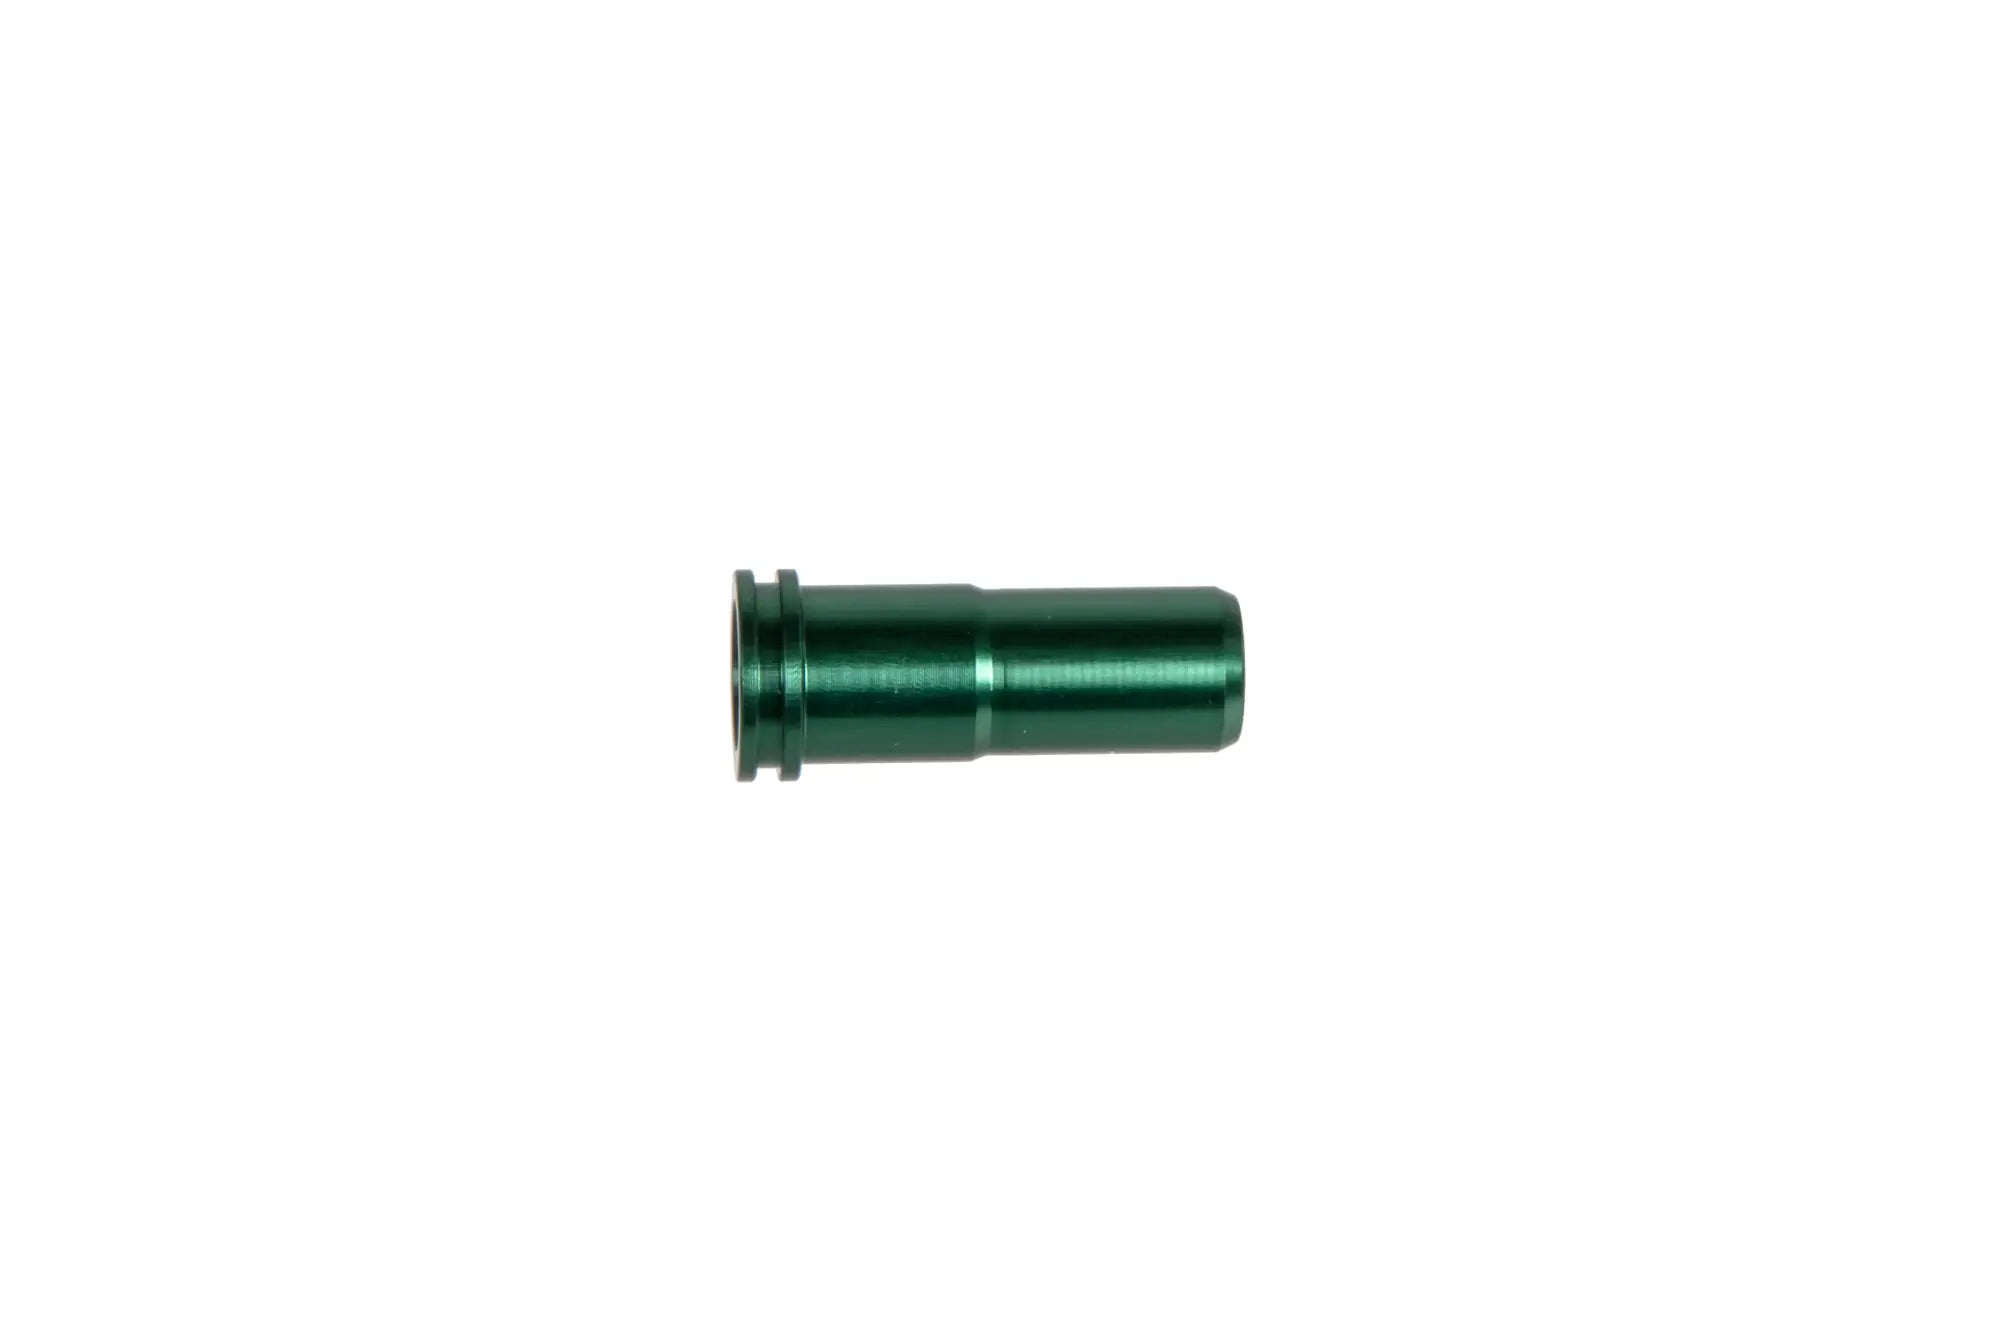 Sealed ERGAL nozzle for M4/AR-15 replicas 21.33mm Green-2